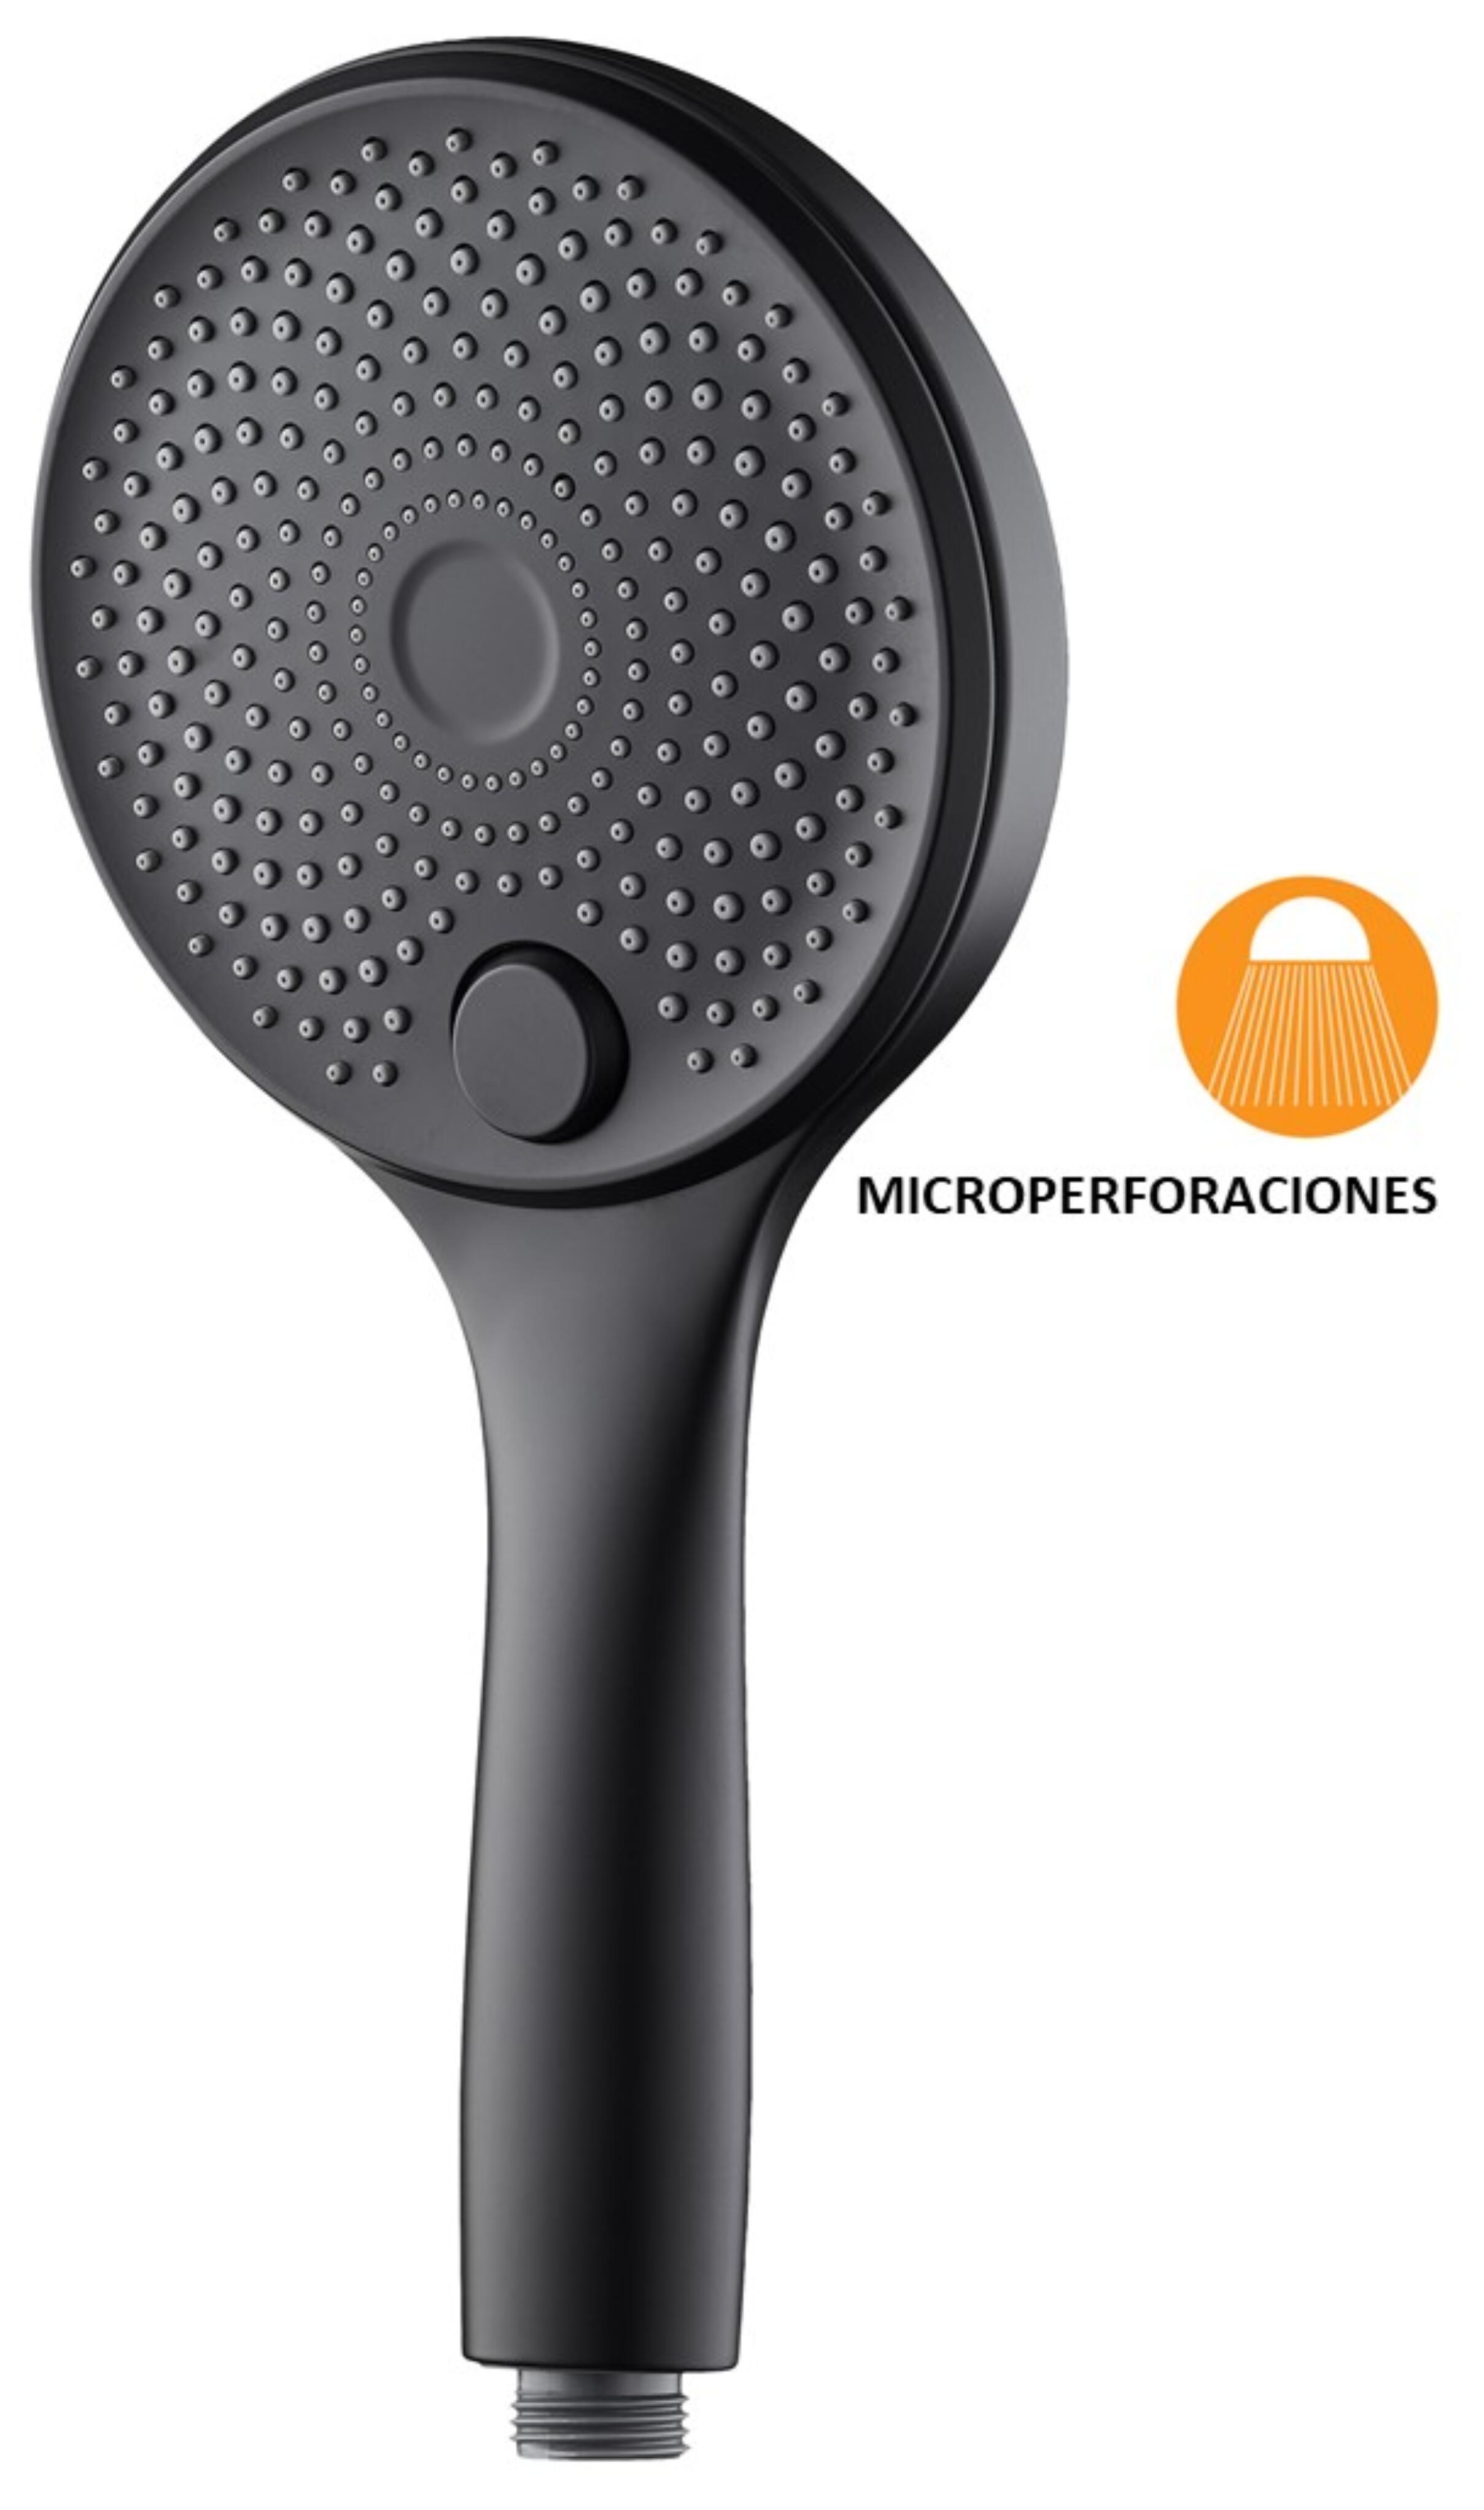 Alcachofa de ducha edouard rousseau microperforacion negro con 3 funciones